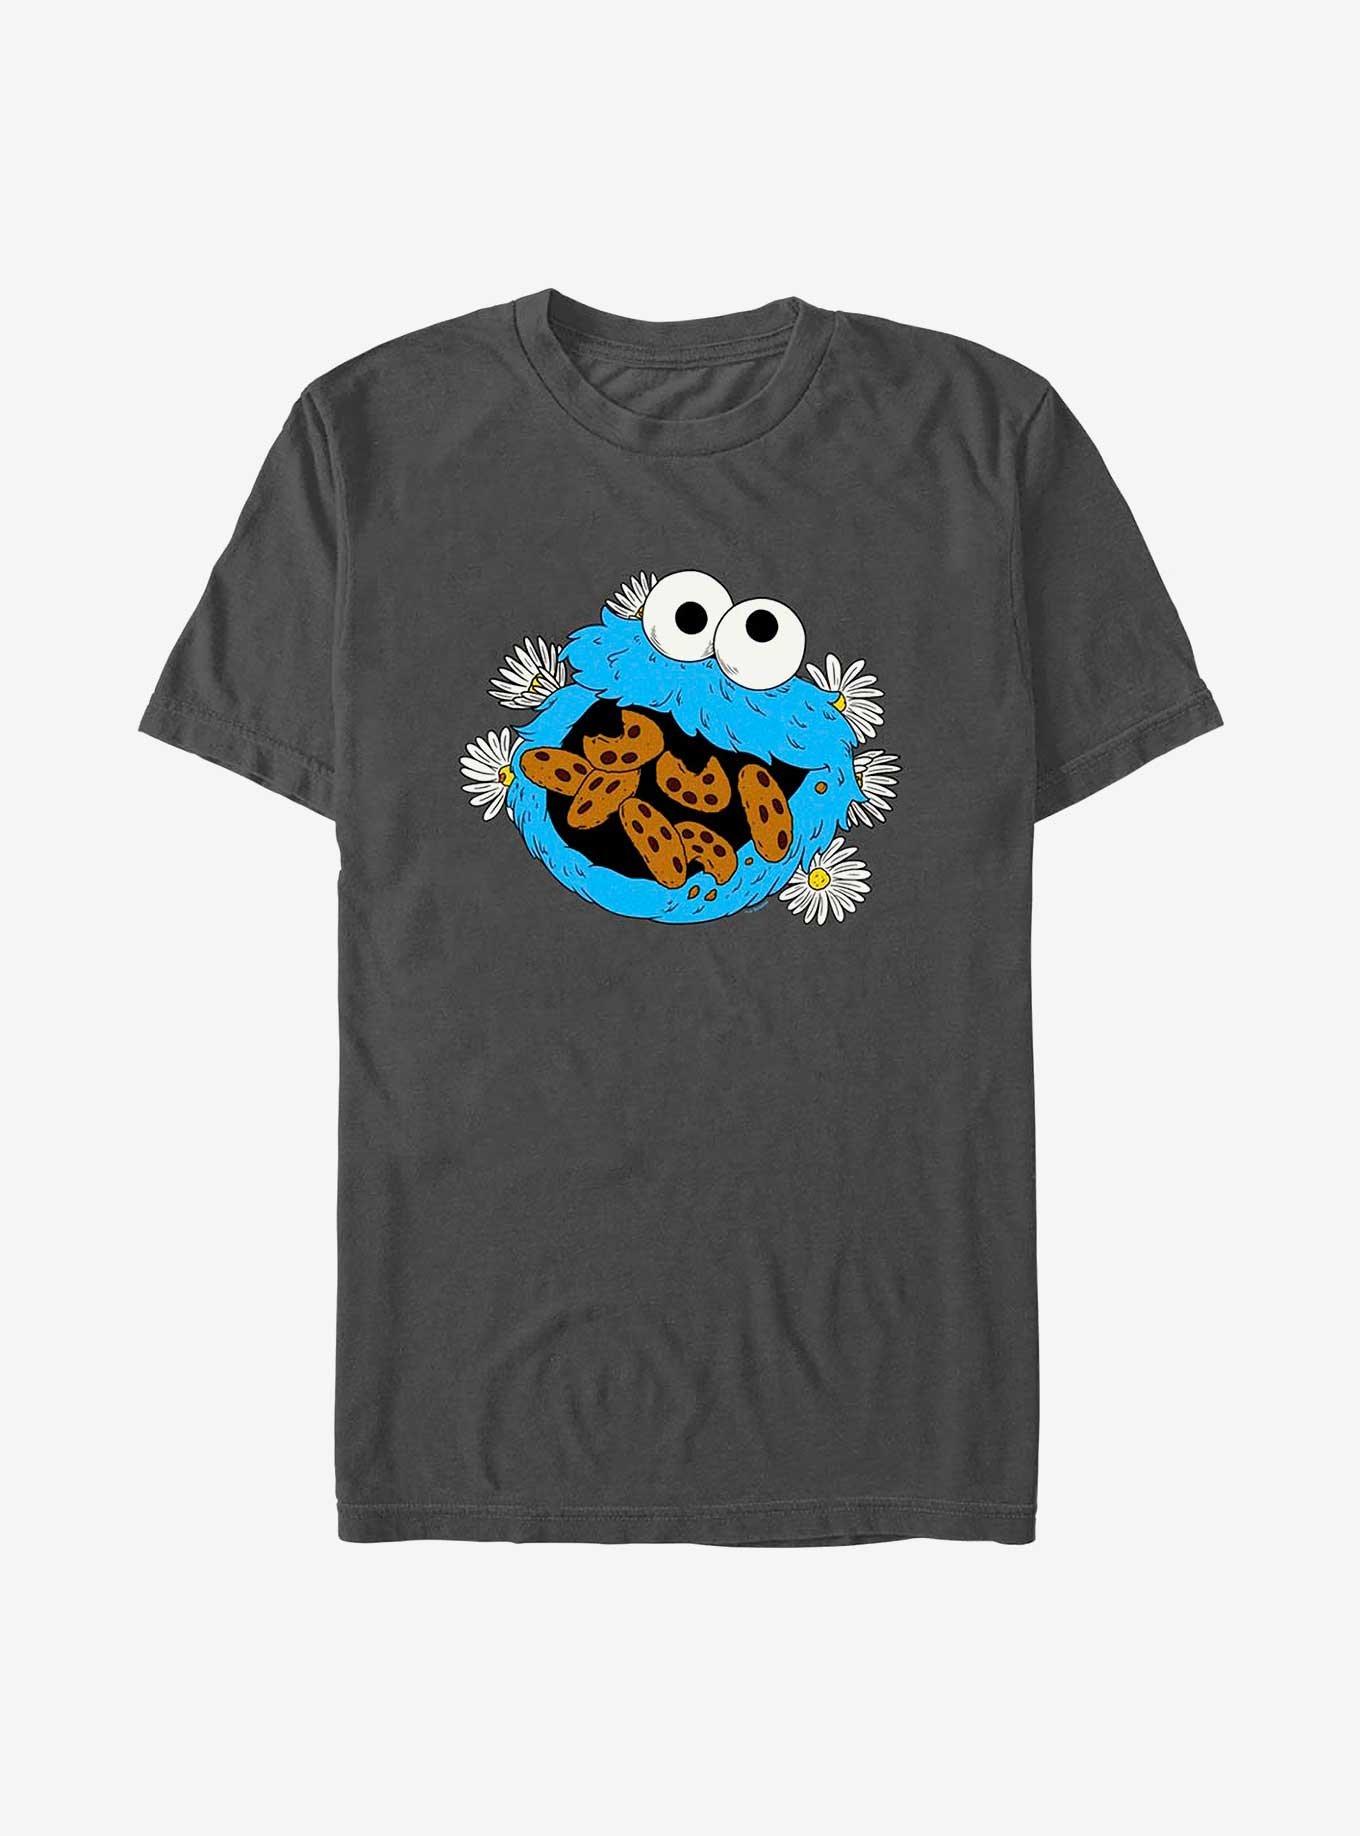 Cookie Monster Cookies T-Shirt